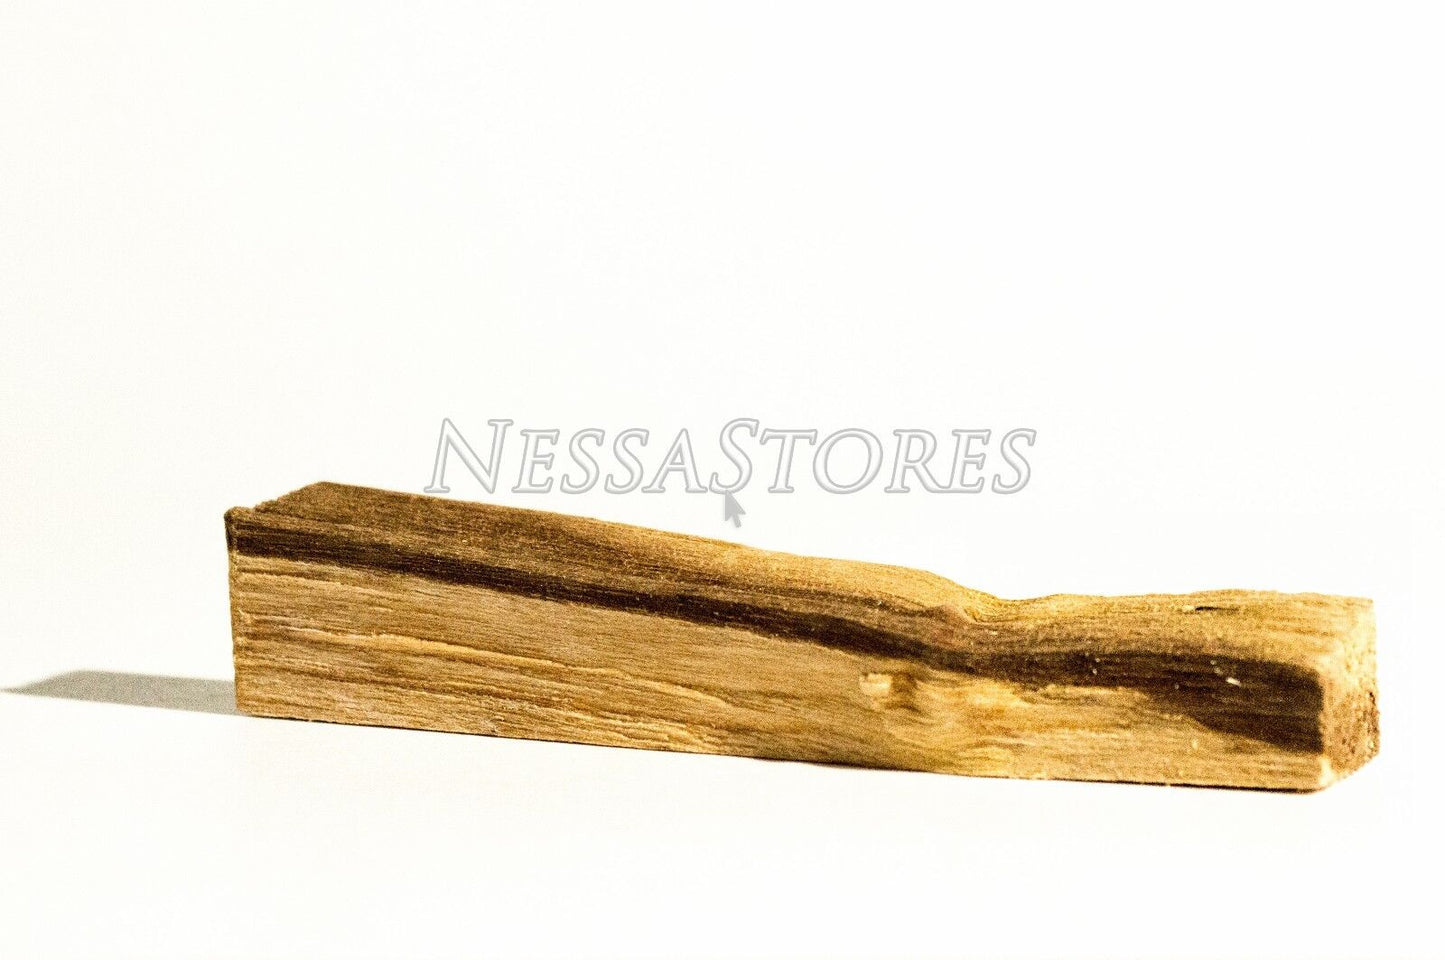 NessaStores Palo Santo Holy Wood Incense Sticks Peruvian ( 5 pcs) #JC-65